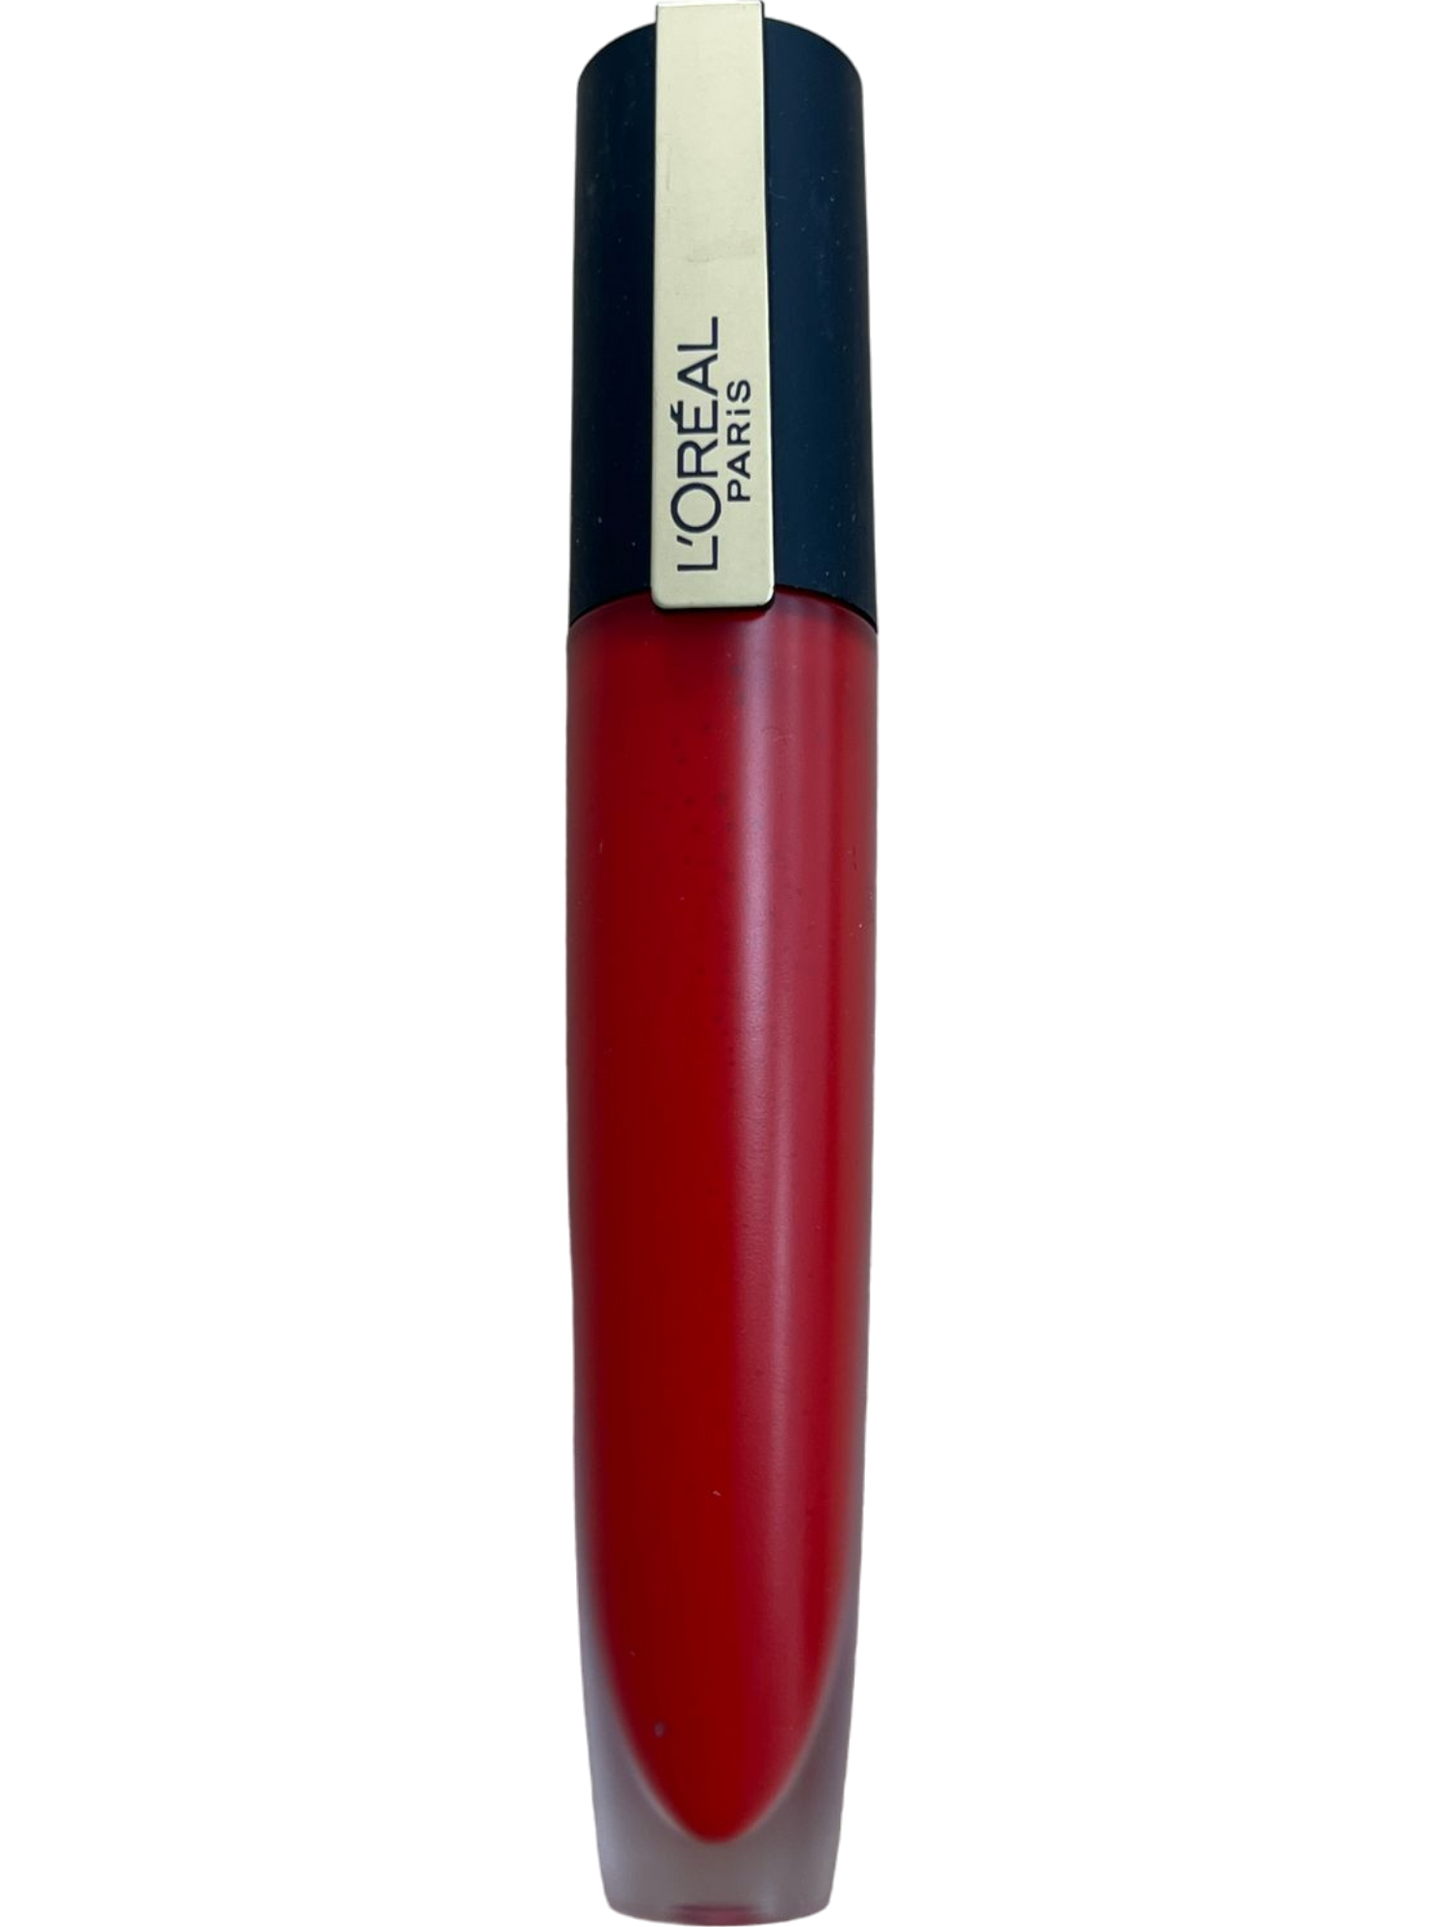 L'Oreal Paris Red Lightweight Matte Lip Stain High Pigment